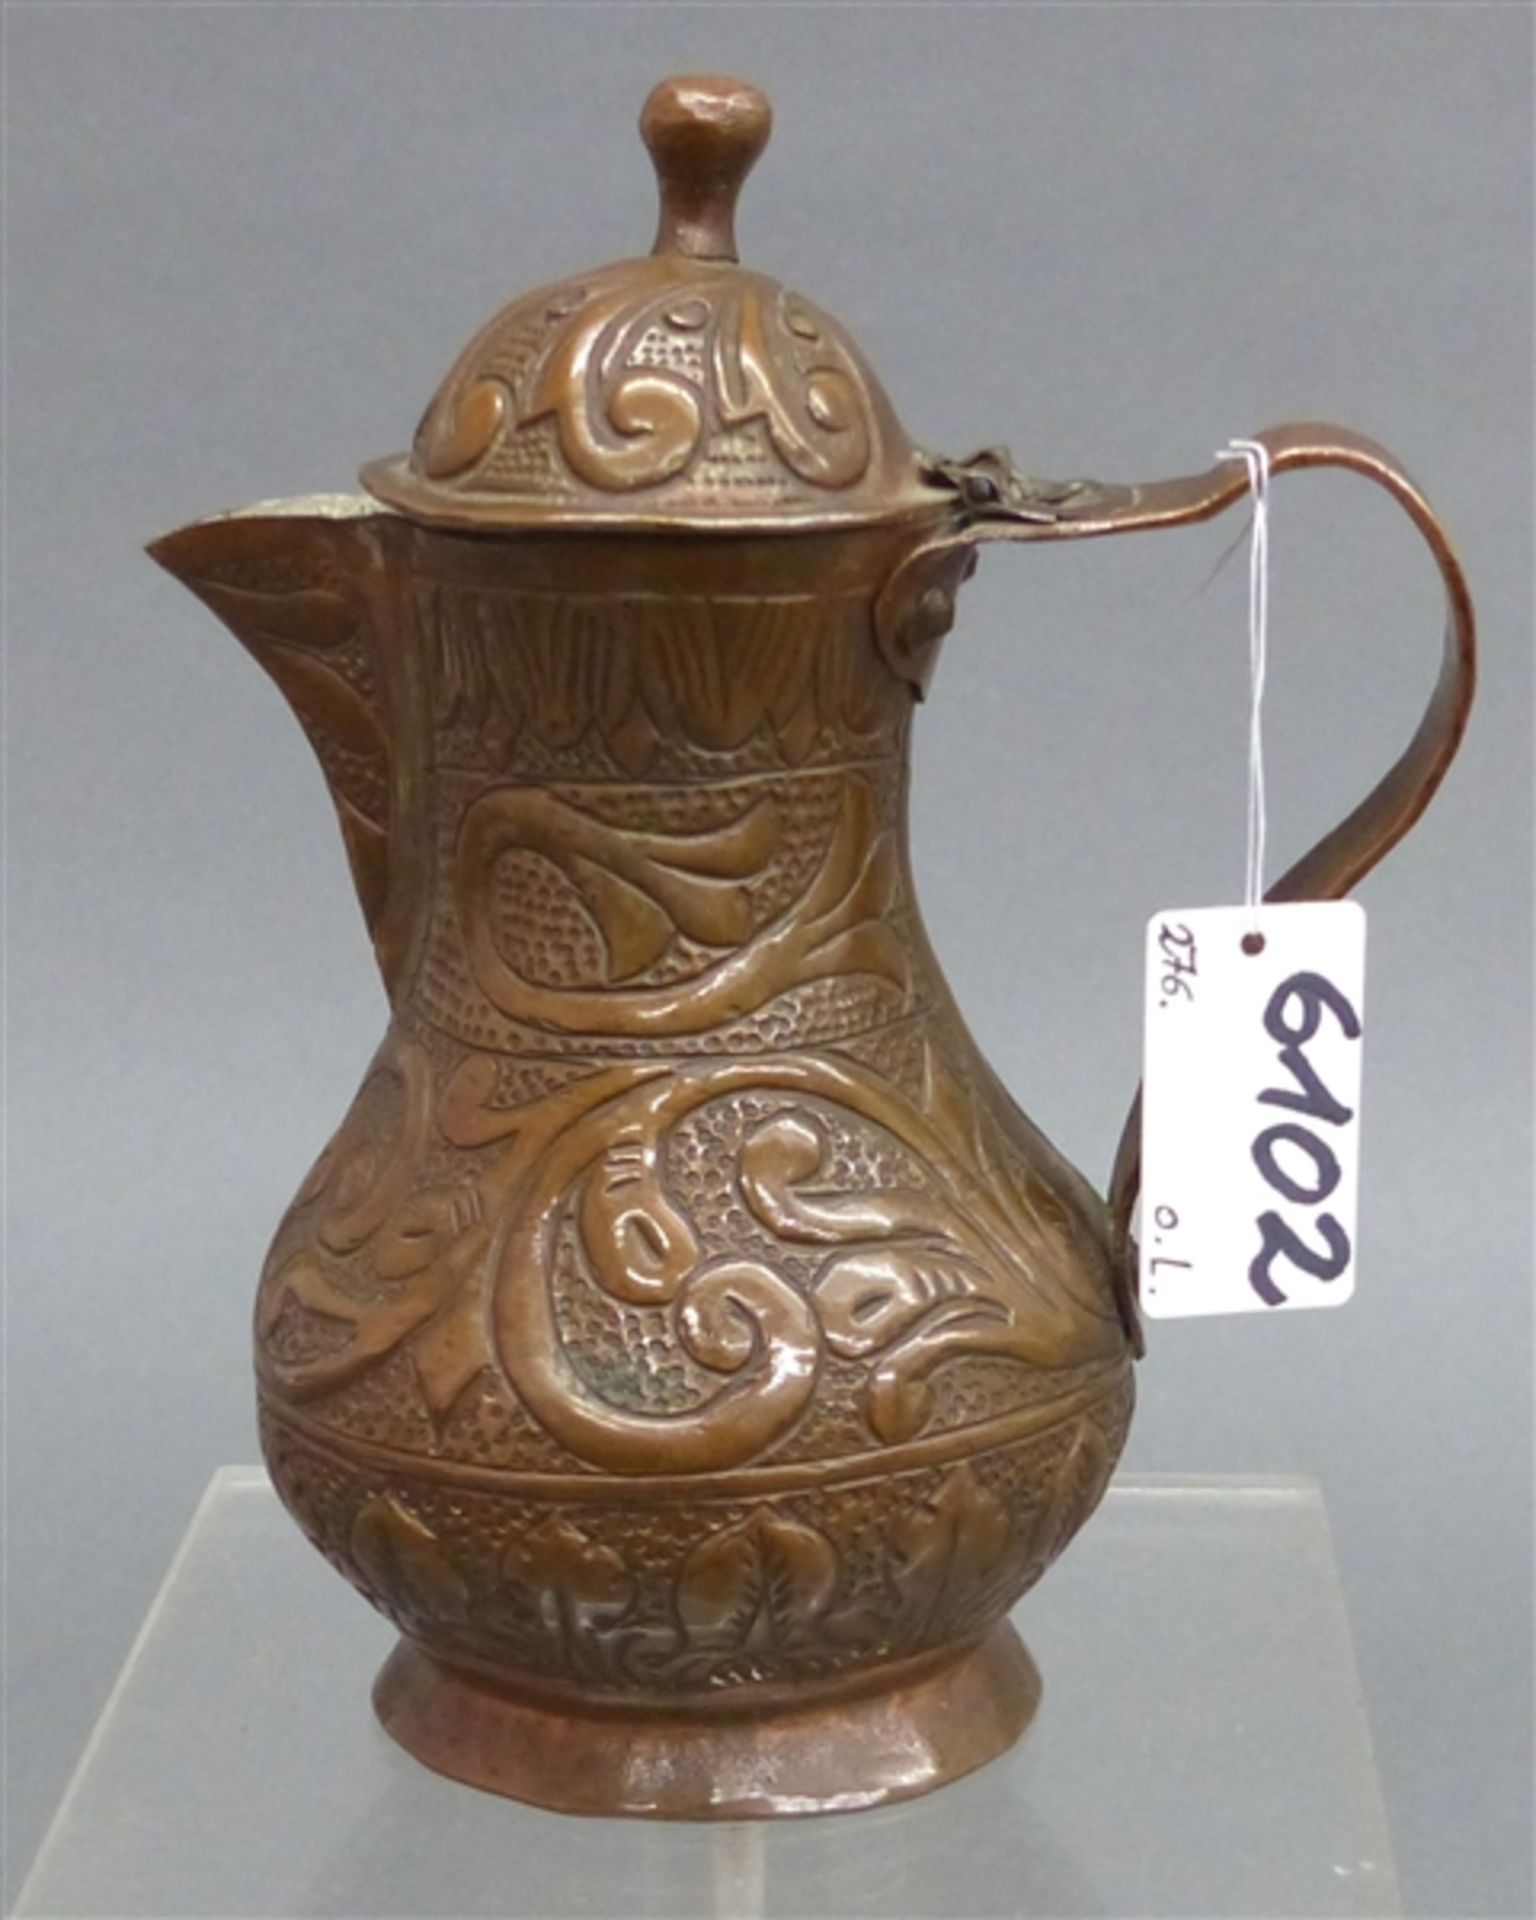 Henkelkännchen, 19. Jh. Kupfer, Ornamentreliefdekor, innen verzinnt, h 13 cm,